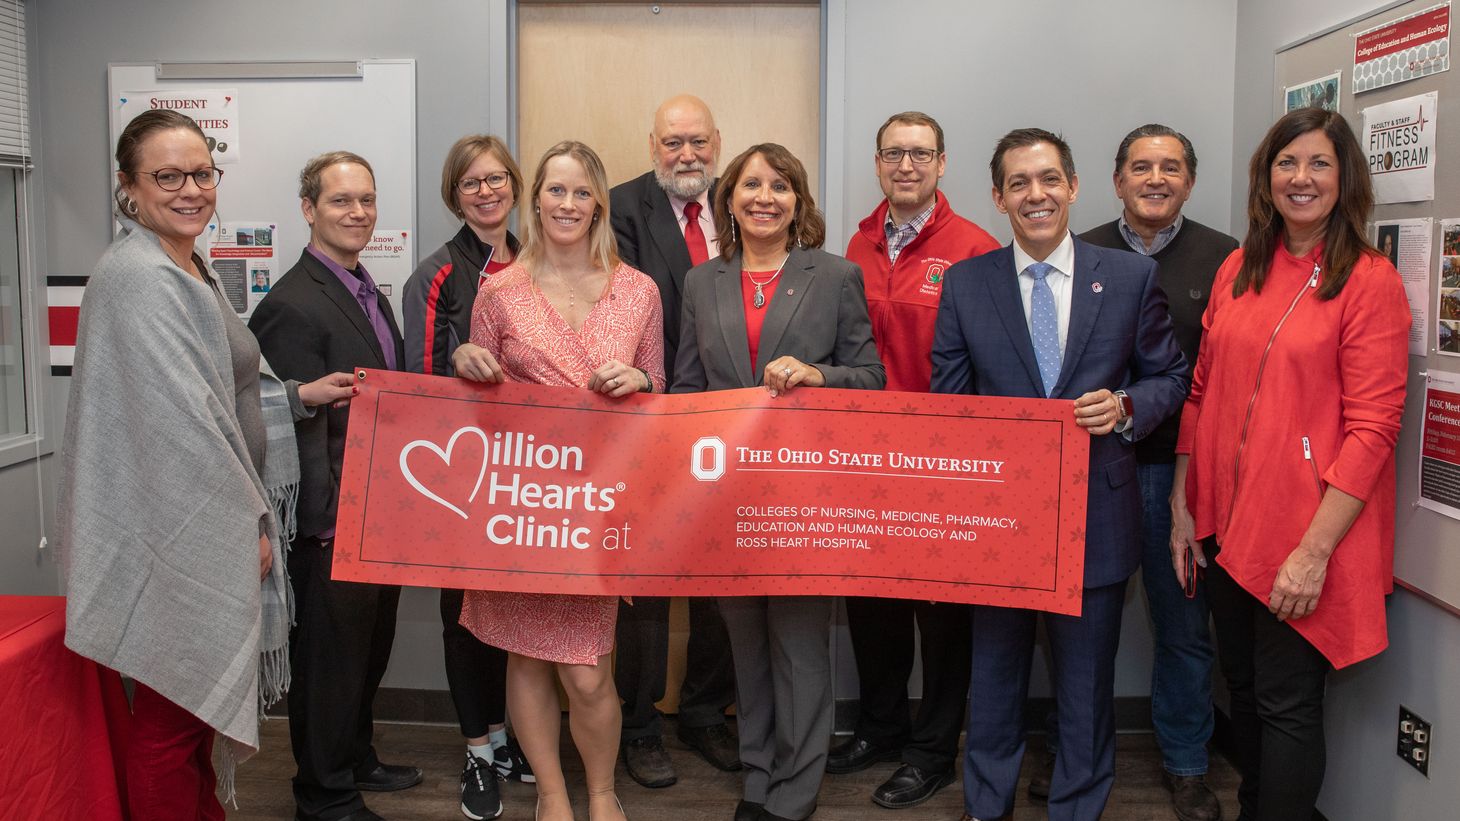 Million Hearts Clinic opening